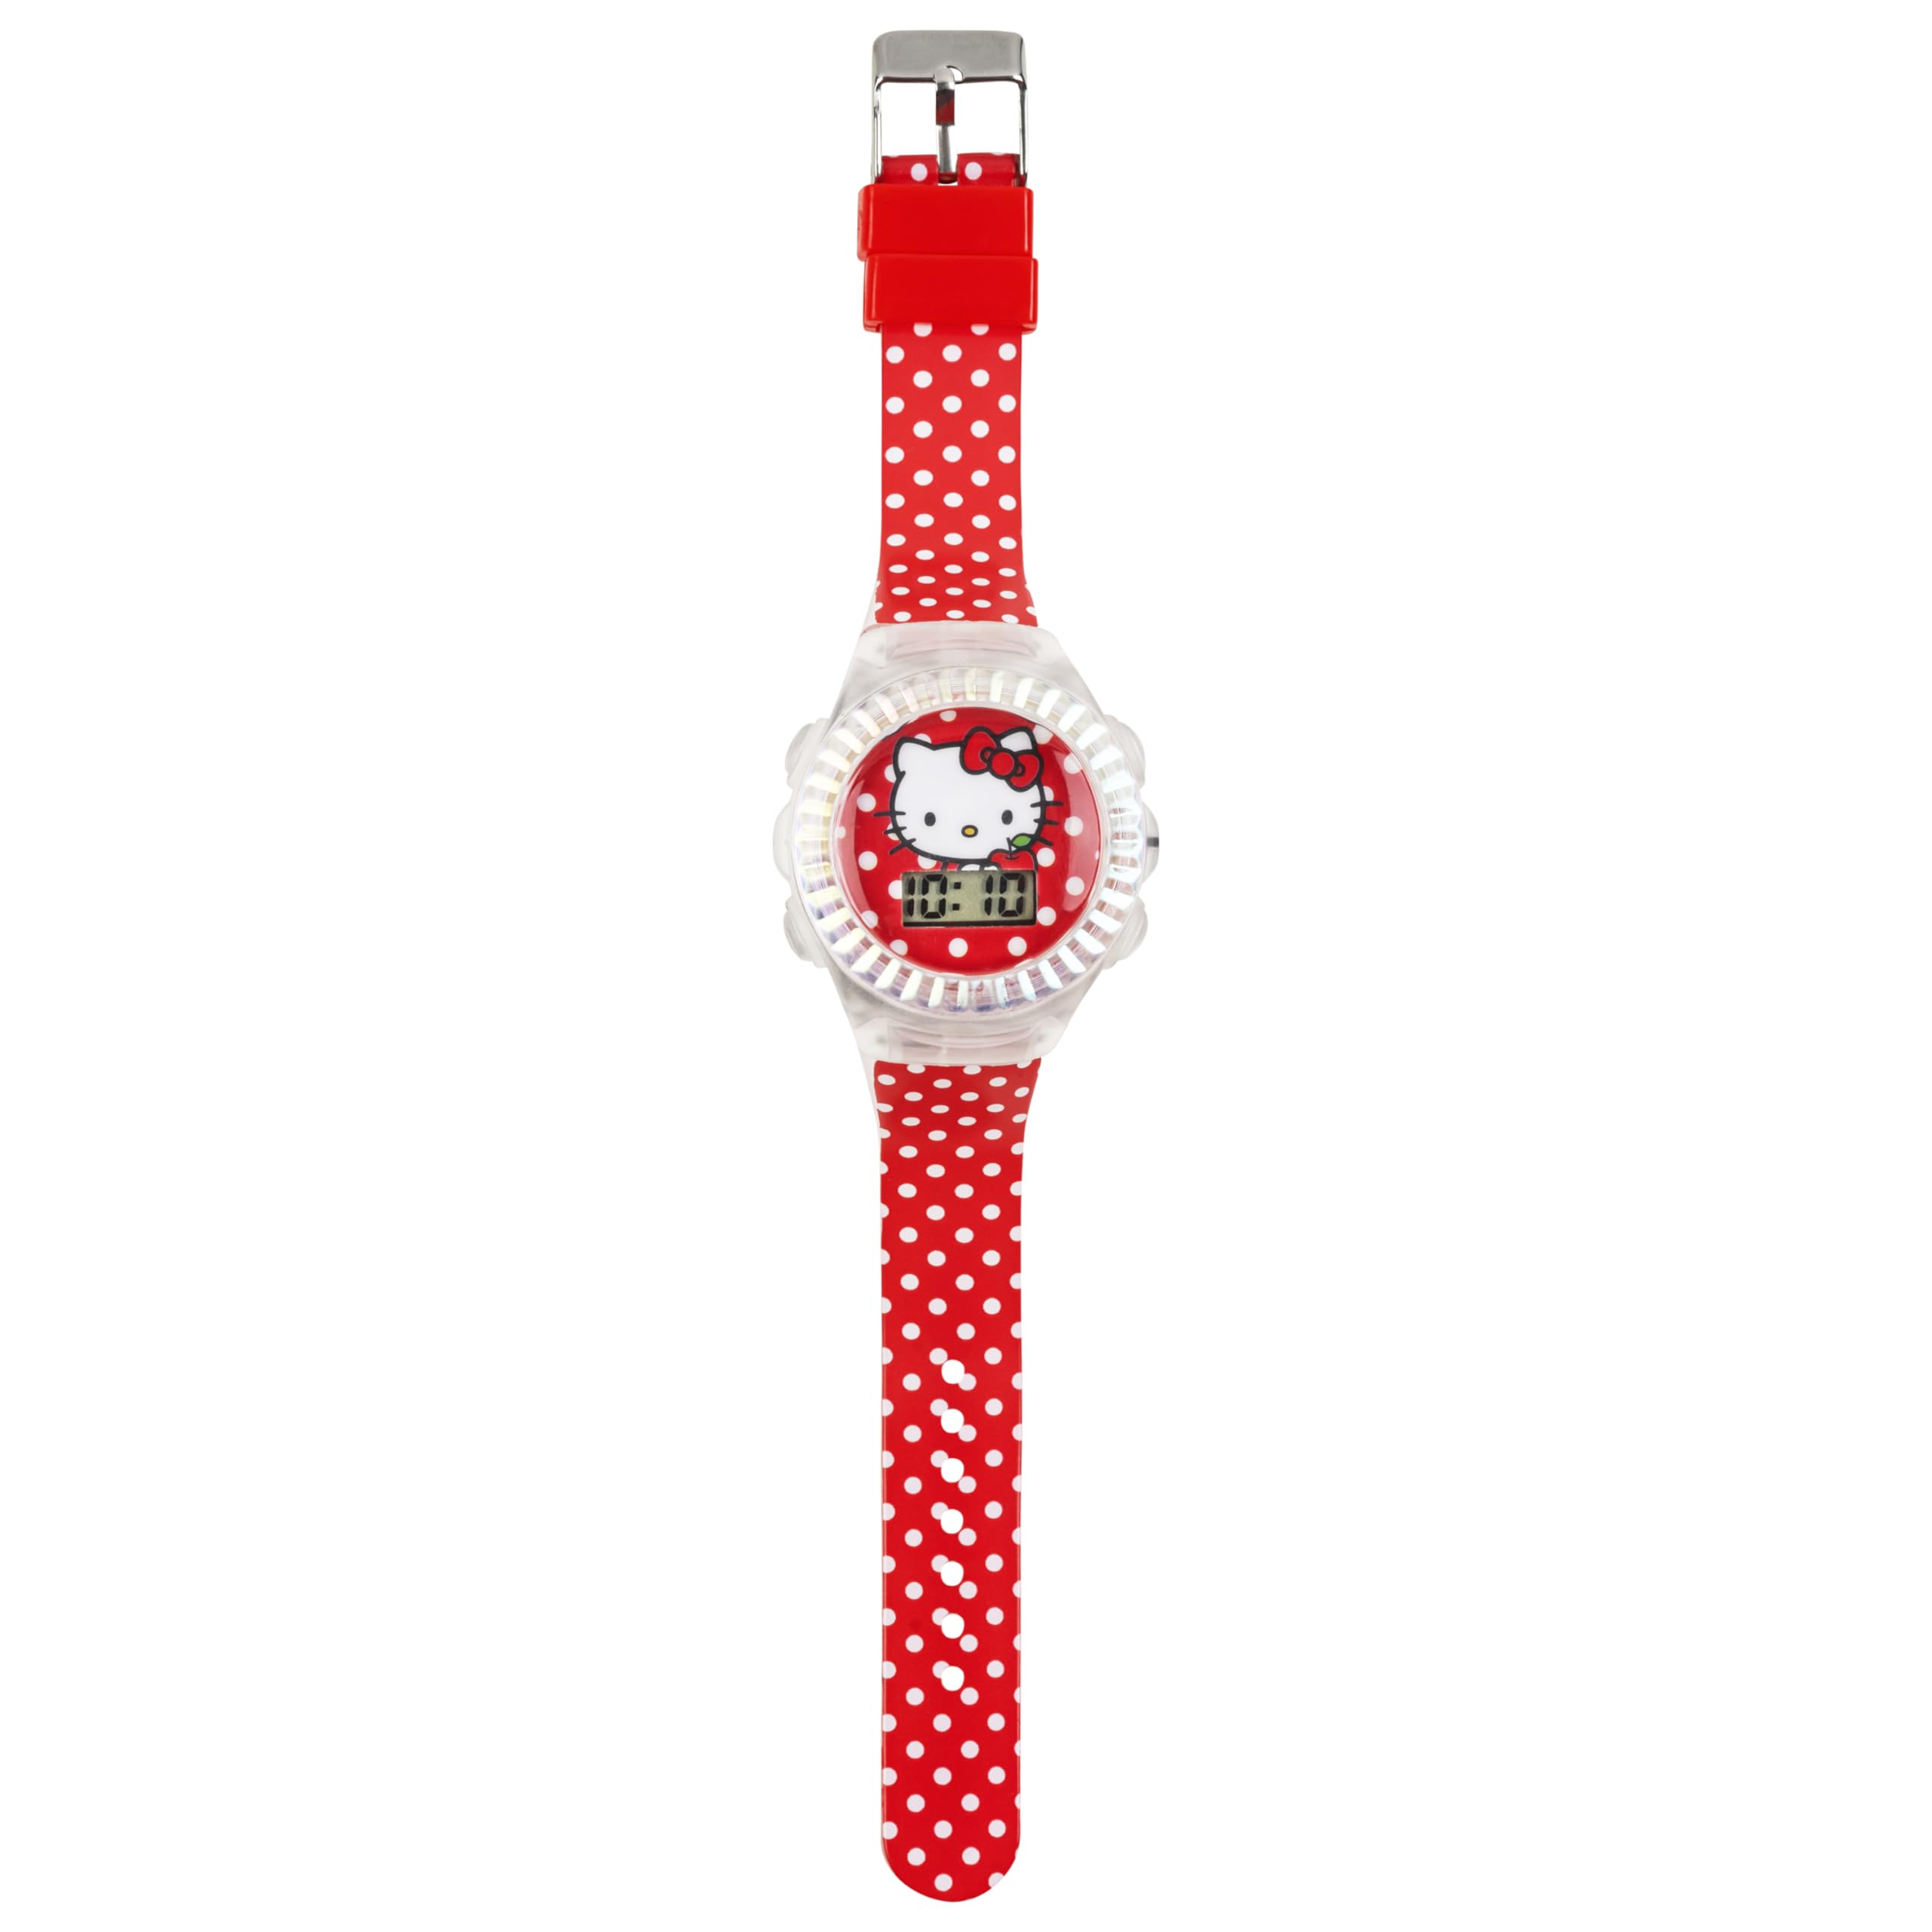 Accutime Hello Kitty Digital LCD Quartz Kids Red Watch for Girls with Polka Dot Print Band Strap (Model: HK4170AZ)